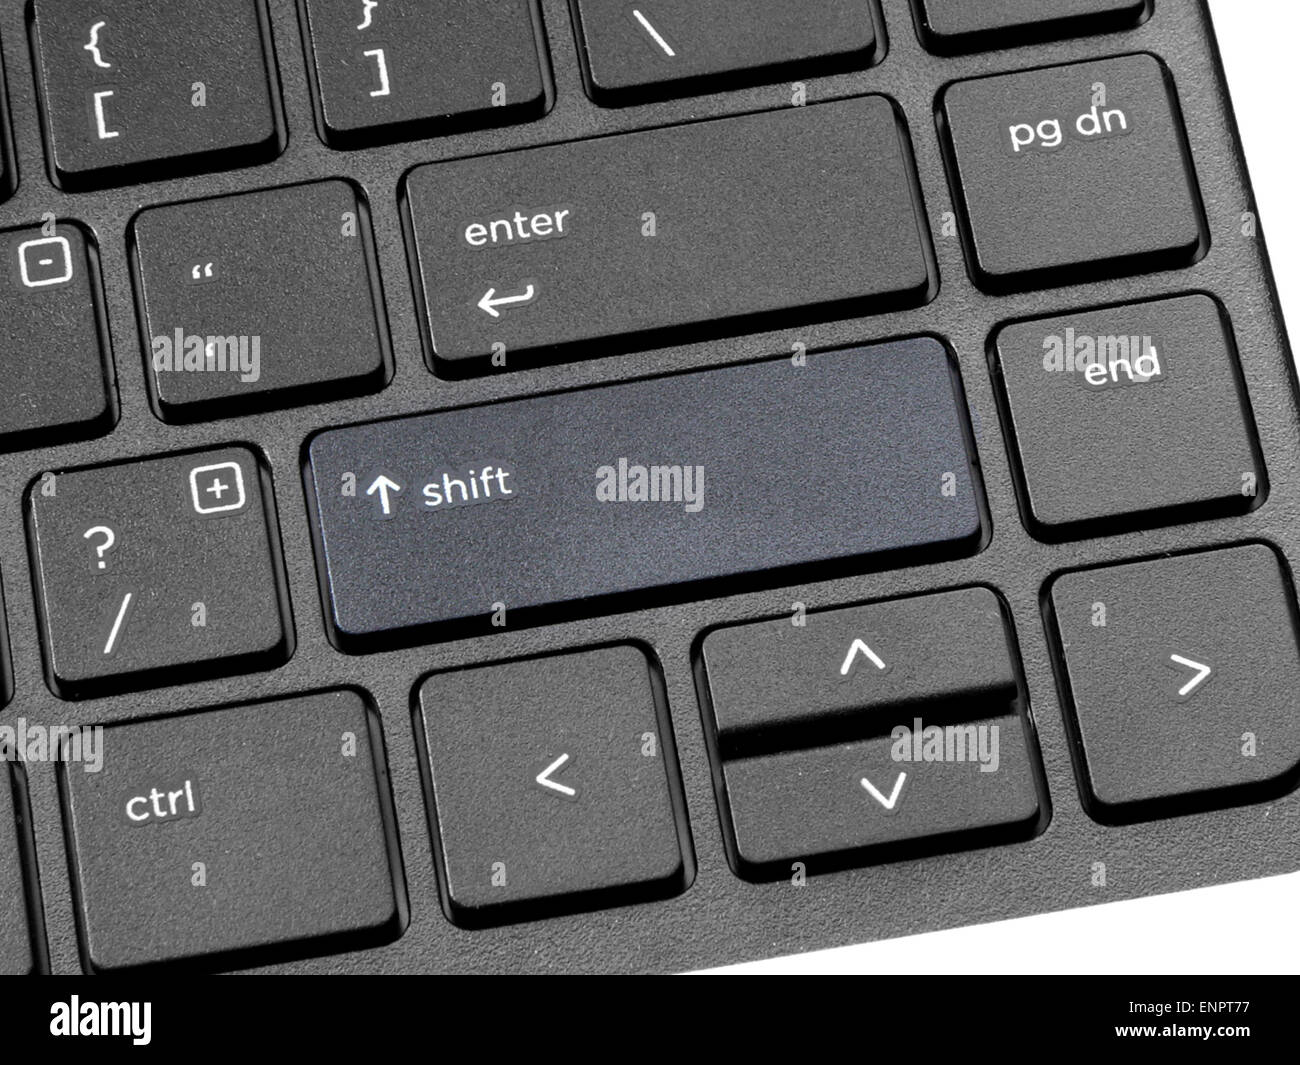 Laptop-Computer-Tastatur mit hervorgehobenen Shift-Taste-Taste  Stockfotografie - Alamy